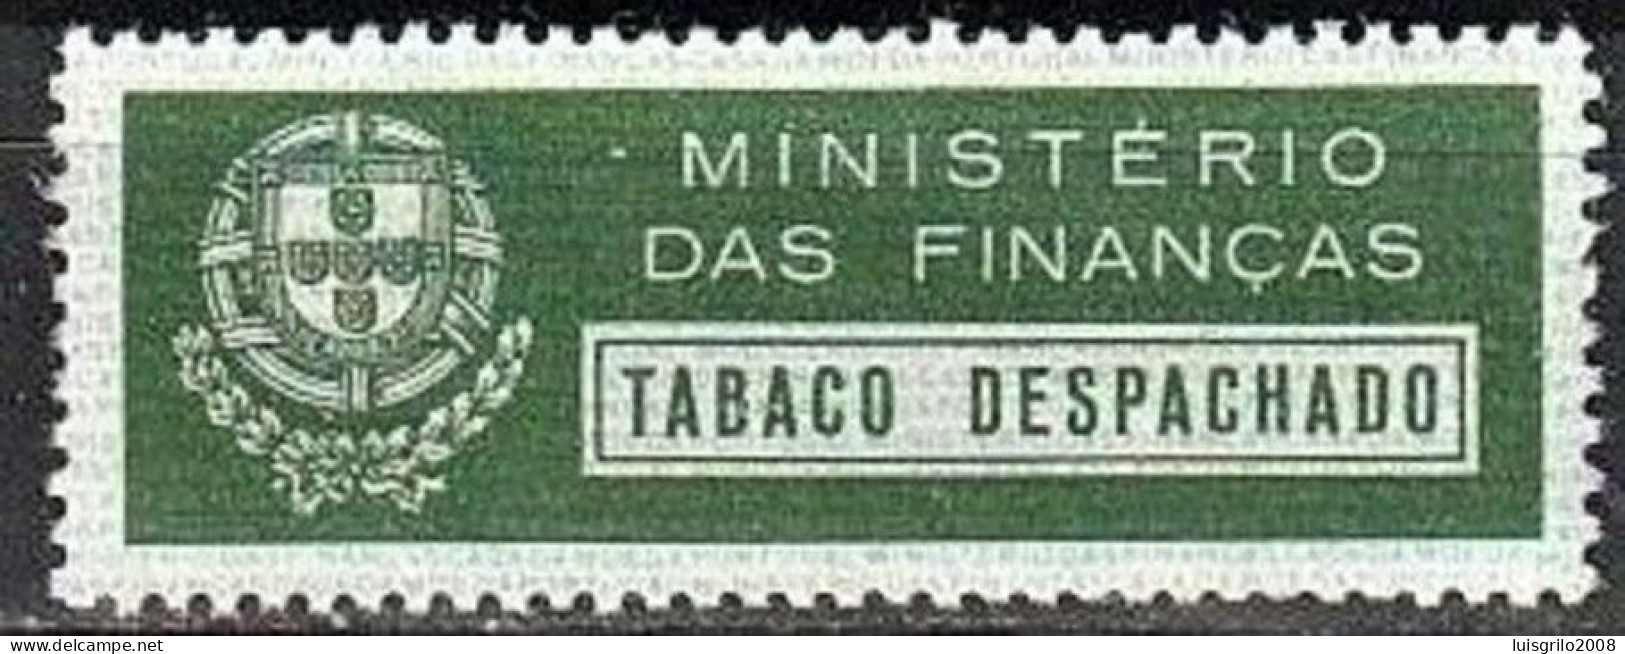 Portugal - Label/ Stamp Pack Of Cigarettes -|- Tabaco Despachado - Ministério Das Finanças - Schnupftabakdosen (leer)